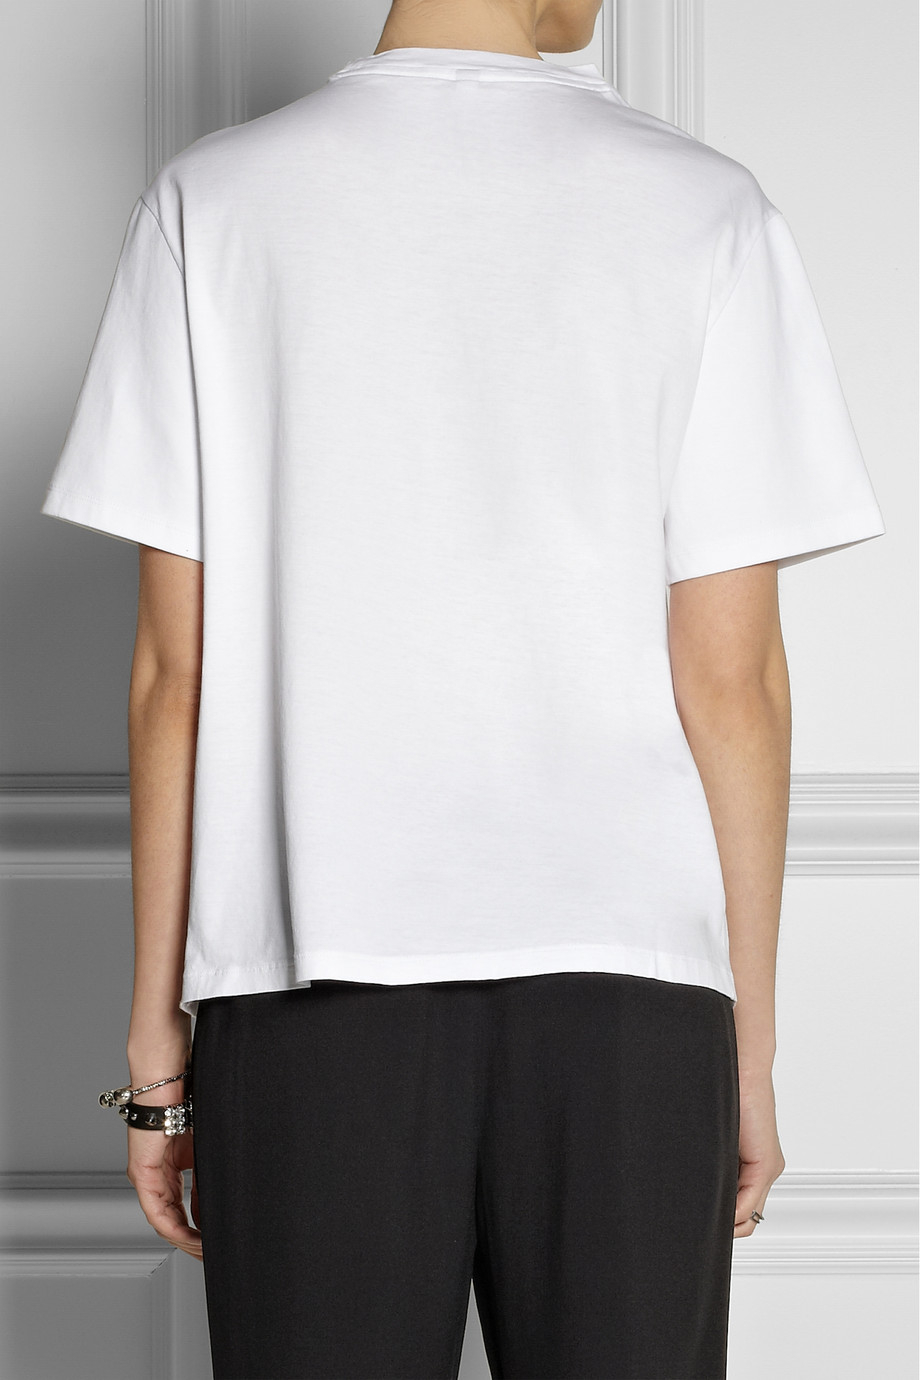 Neil barrett Faux Leather-paneled Cotton-jersey T-shirt in Black | Lyst